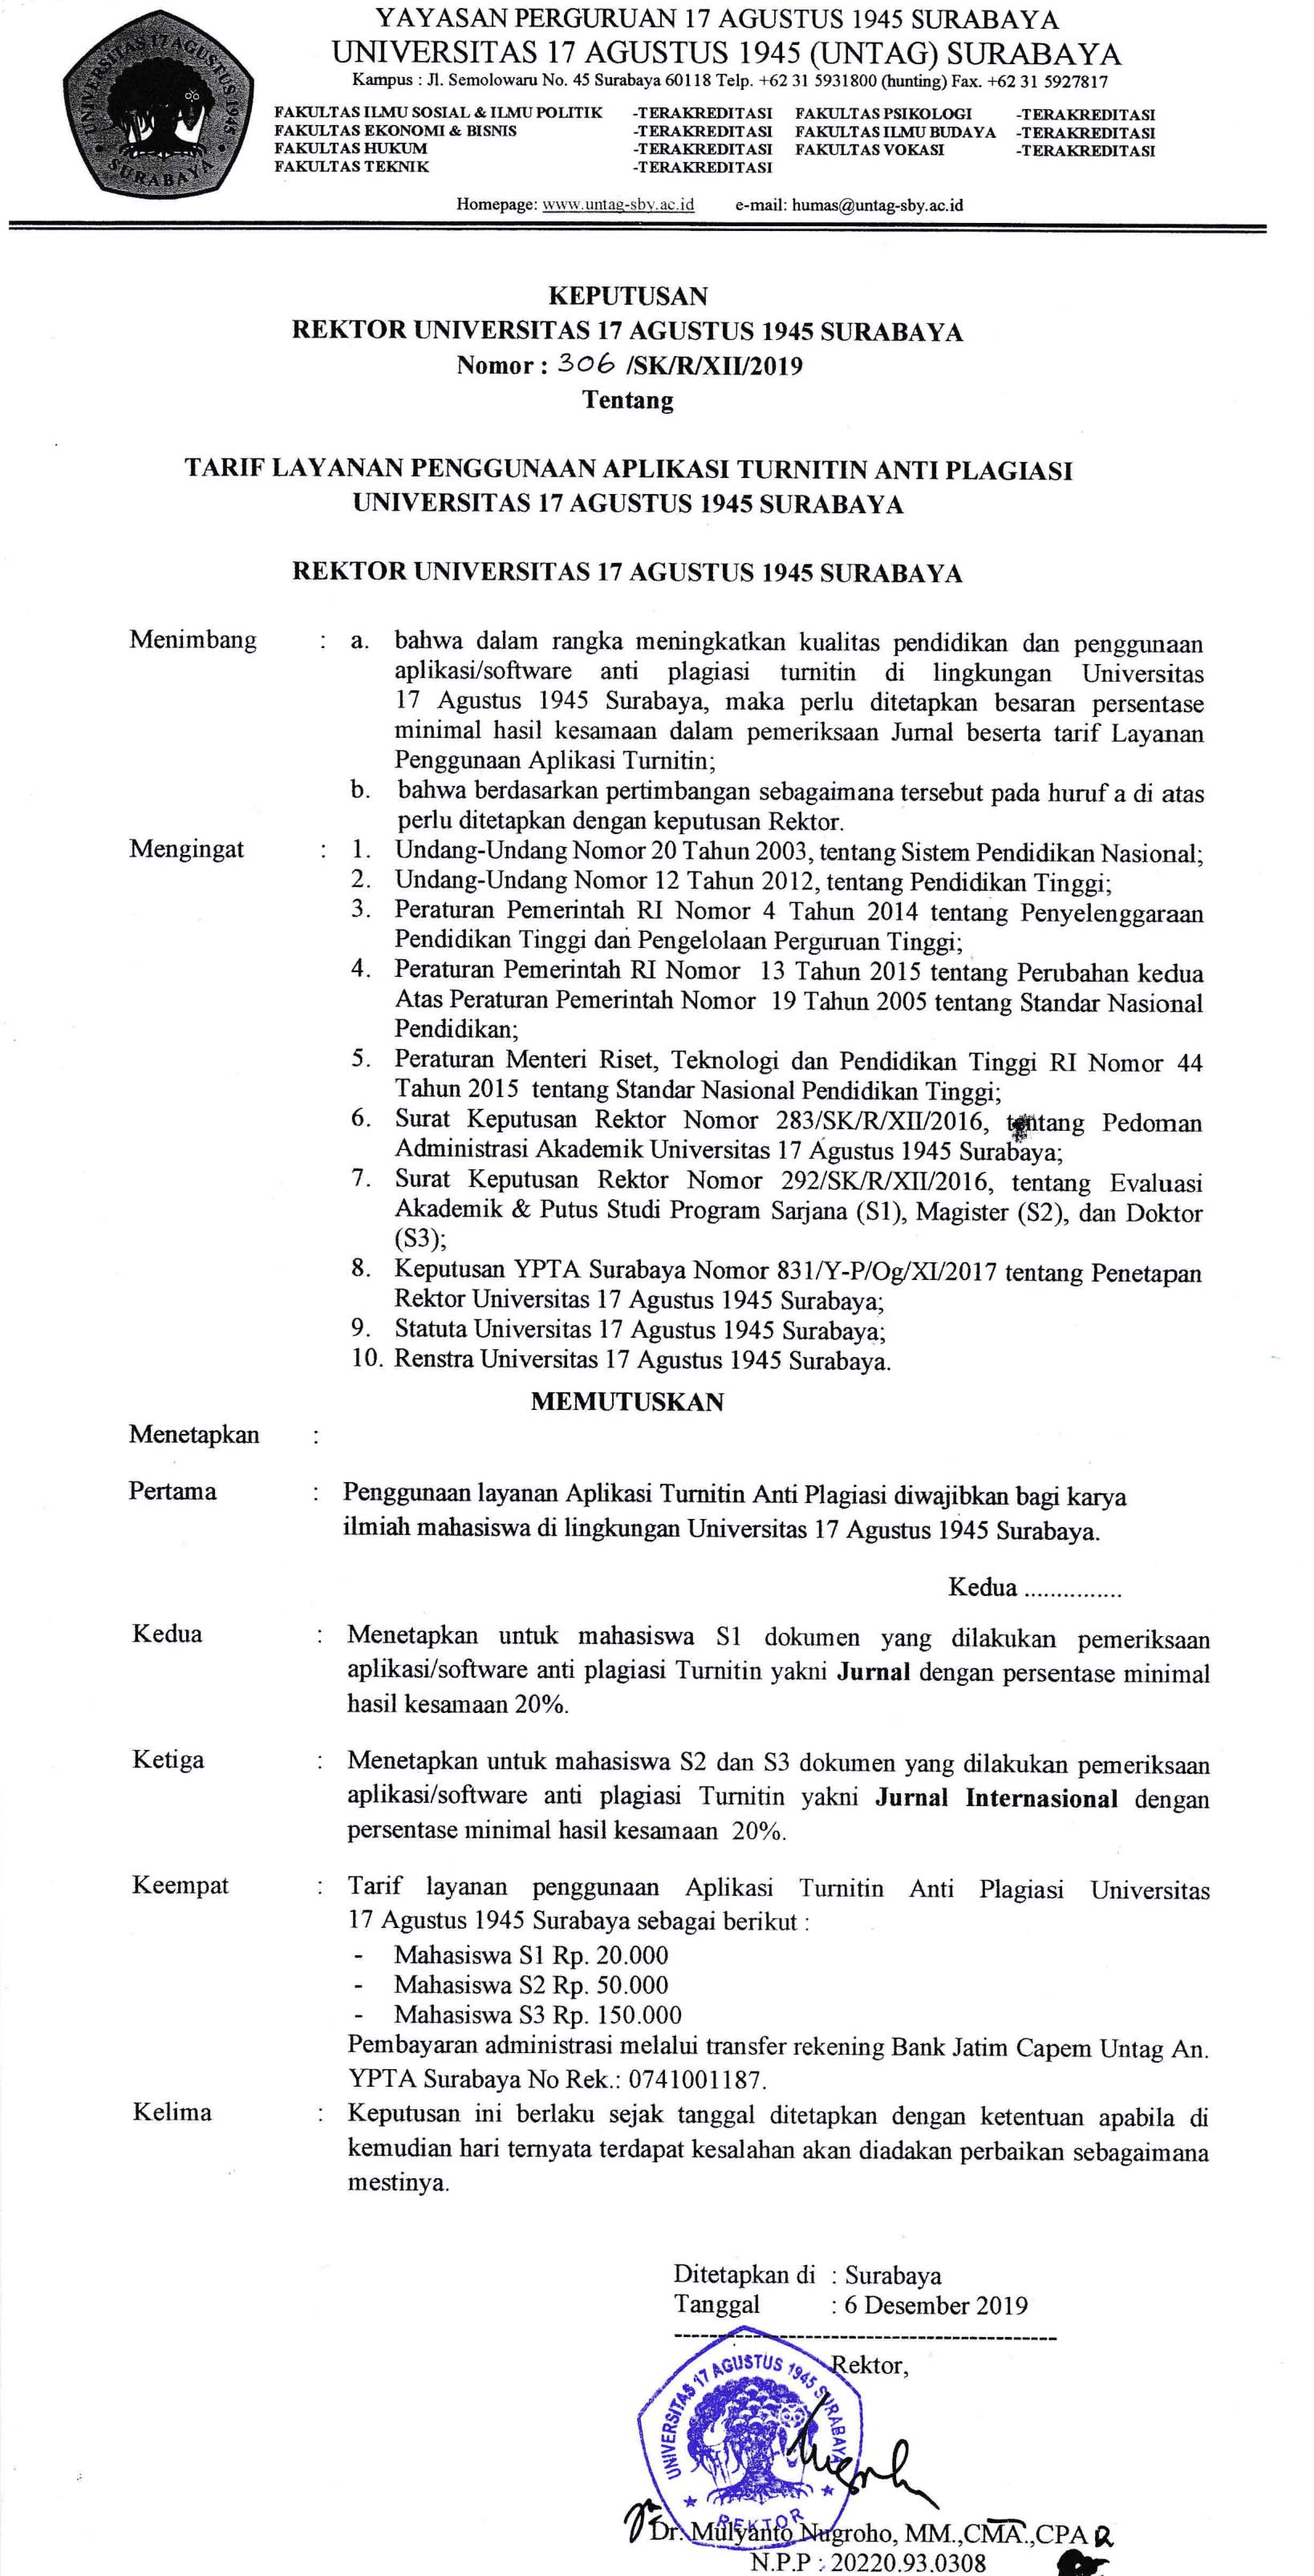 Tarif Layanan Penggunaan Aplikasi Turnitin Anti Plagiasi UNTAG Surabaya (dicabut)